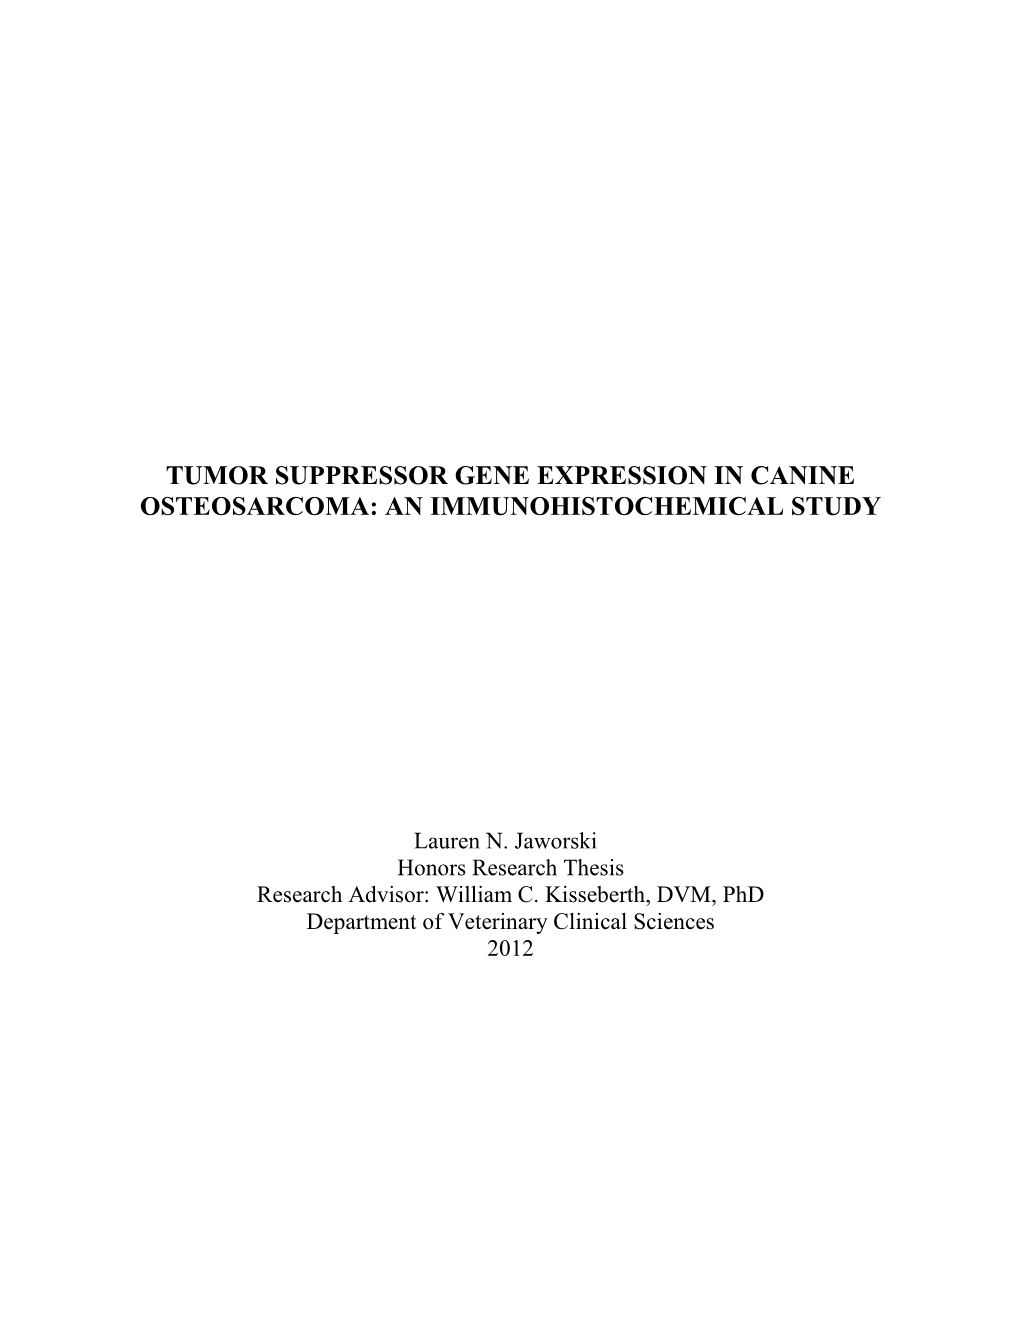 Tumor Suppressor Gene Expression in Canine Osteosarcoma: an Immunohistochemical Study